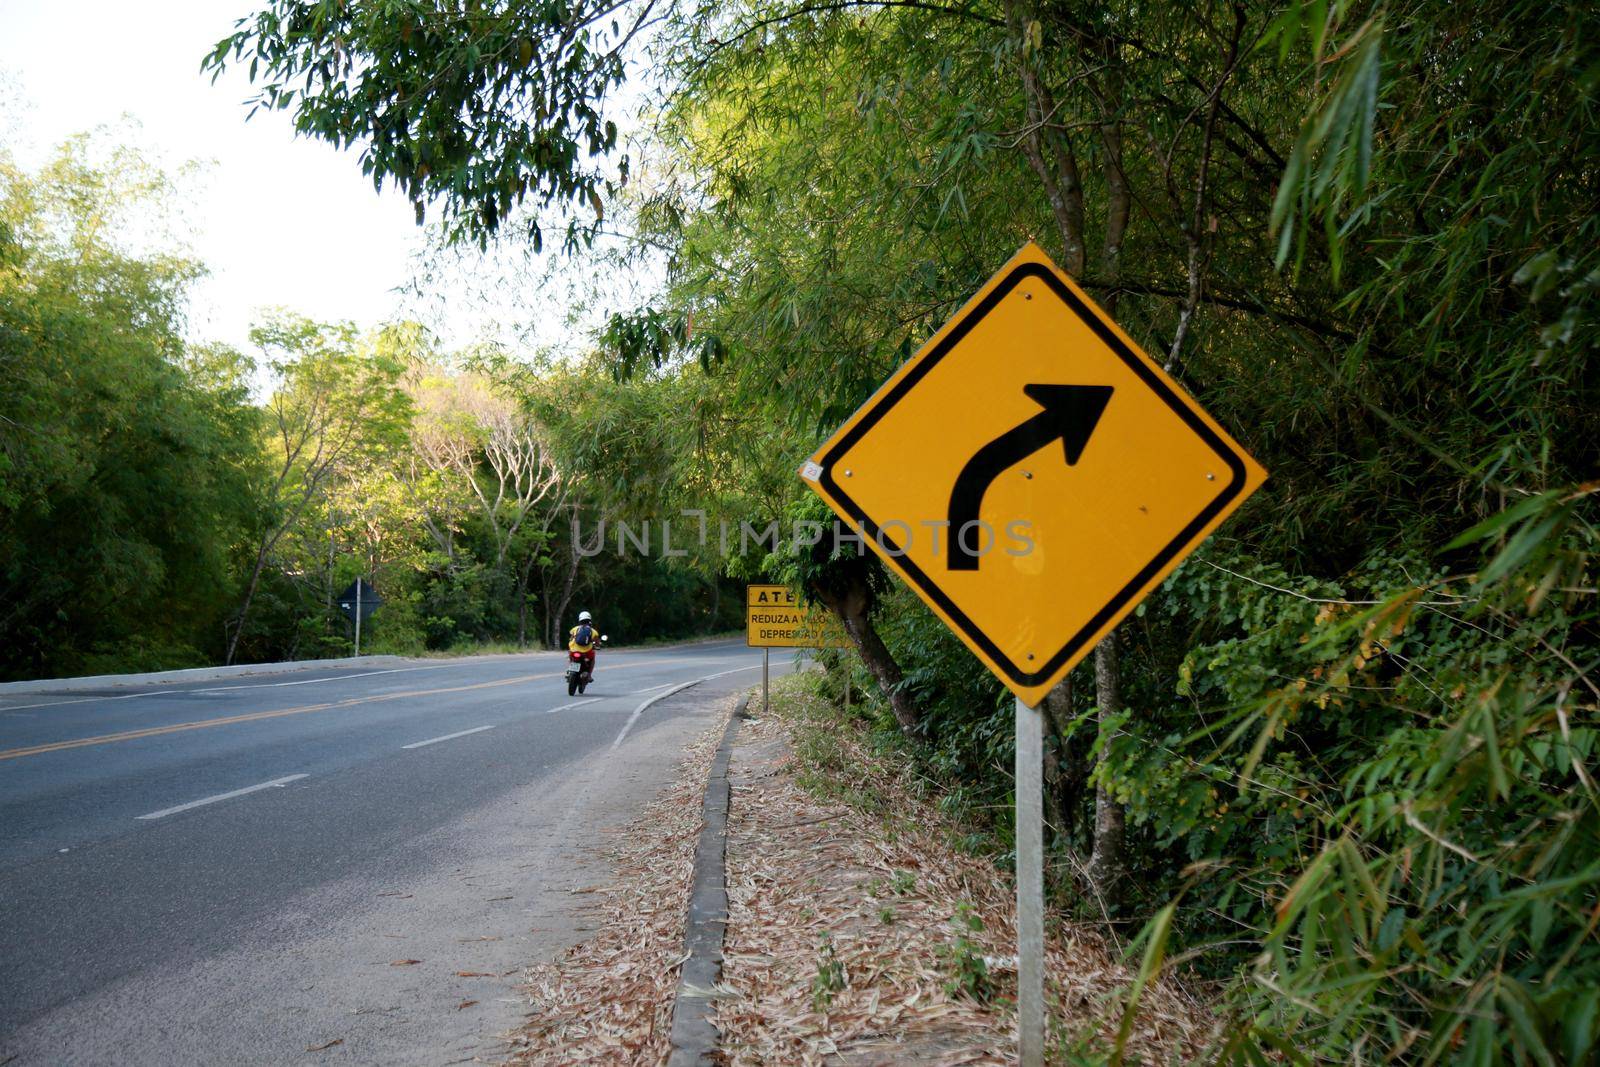 mata de sao joao, bahia / brazil - october 16, 2020: traffic signs indicate a sharp right turn on highway BA 099, in the municipality of Mata de Sao Joao.